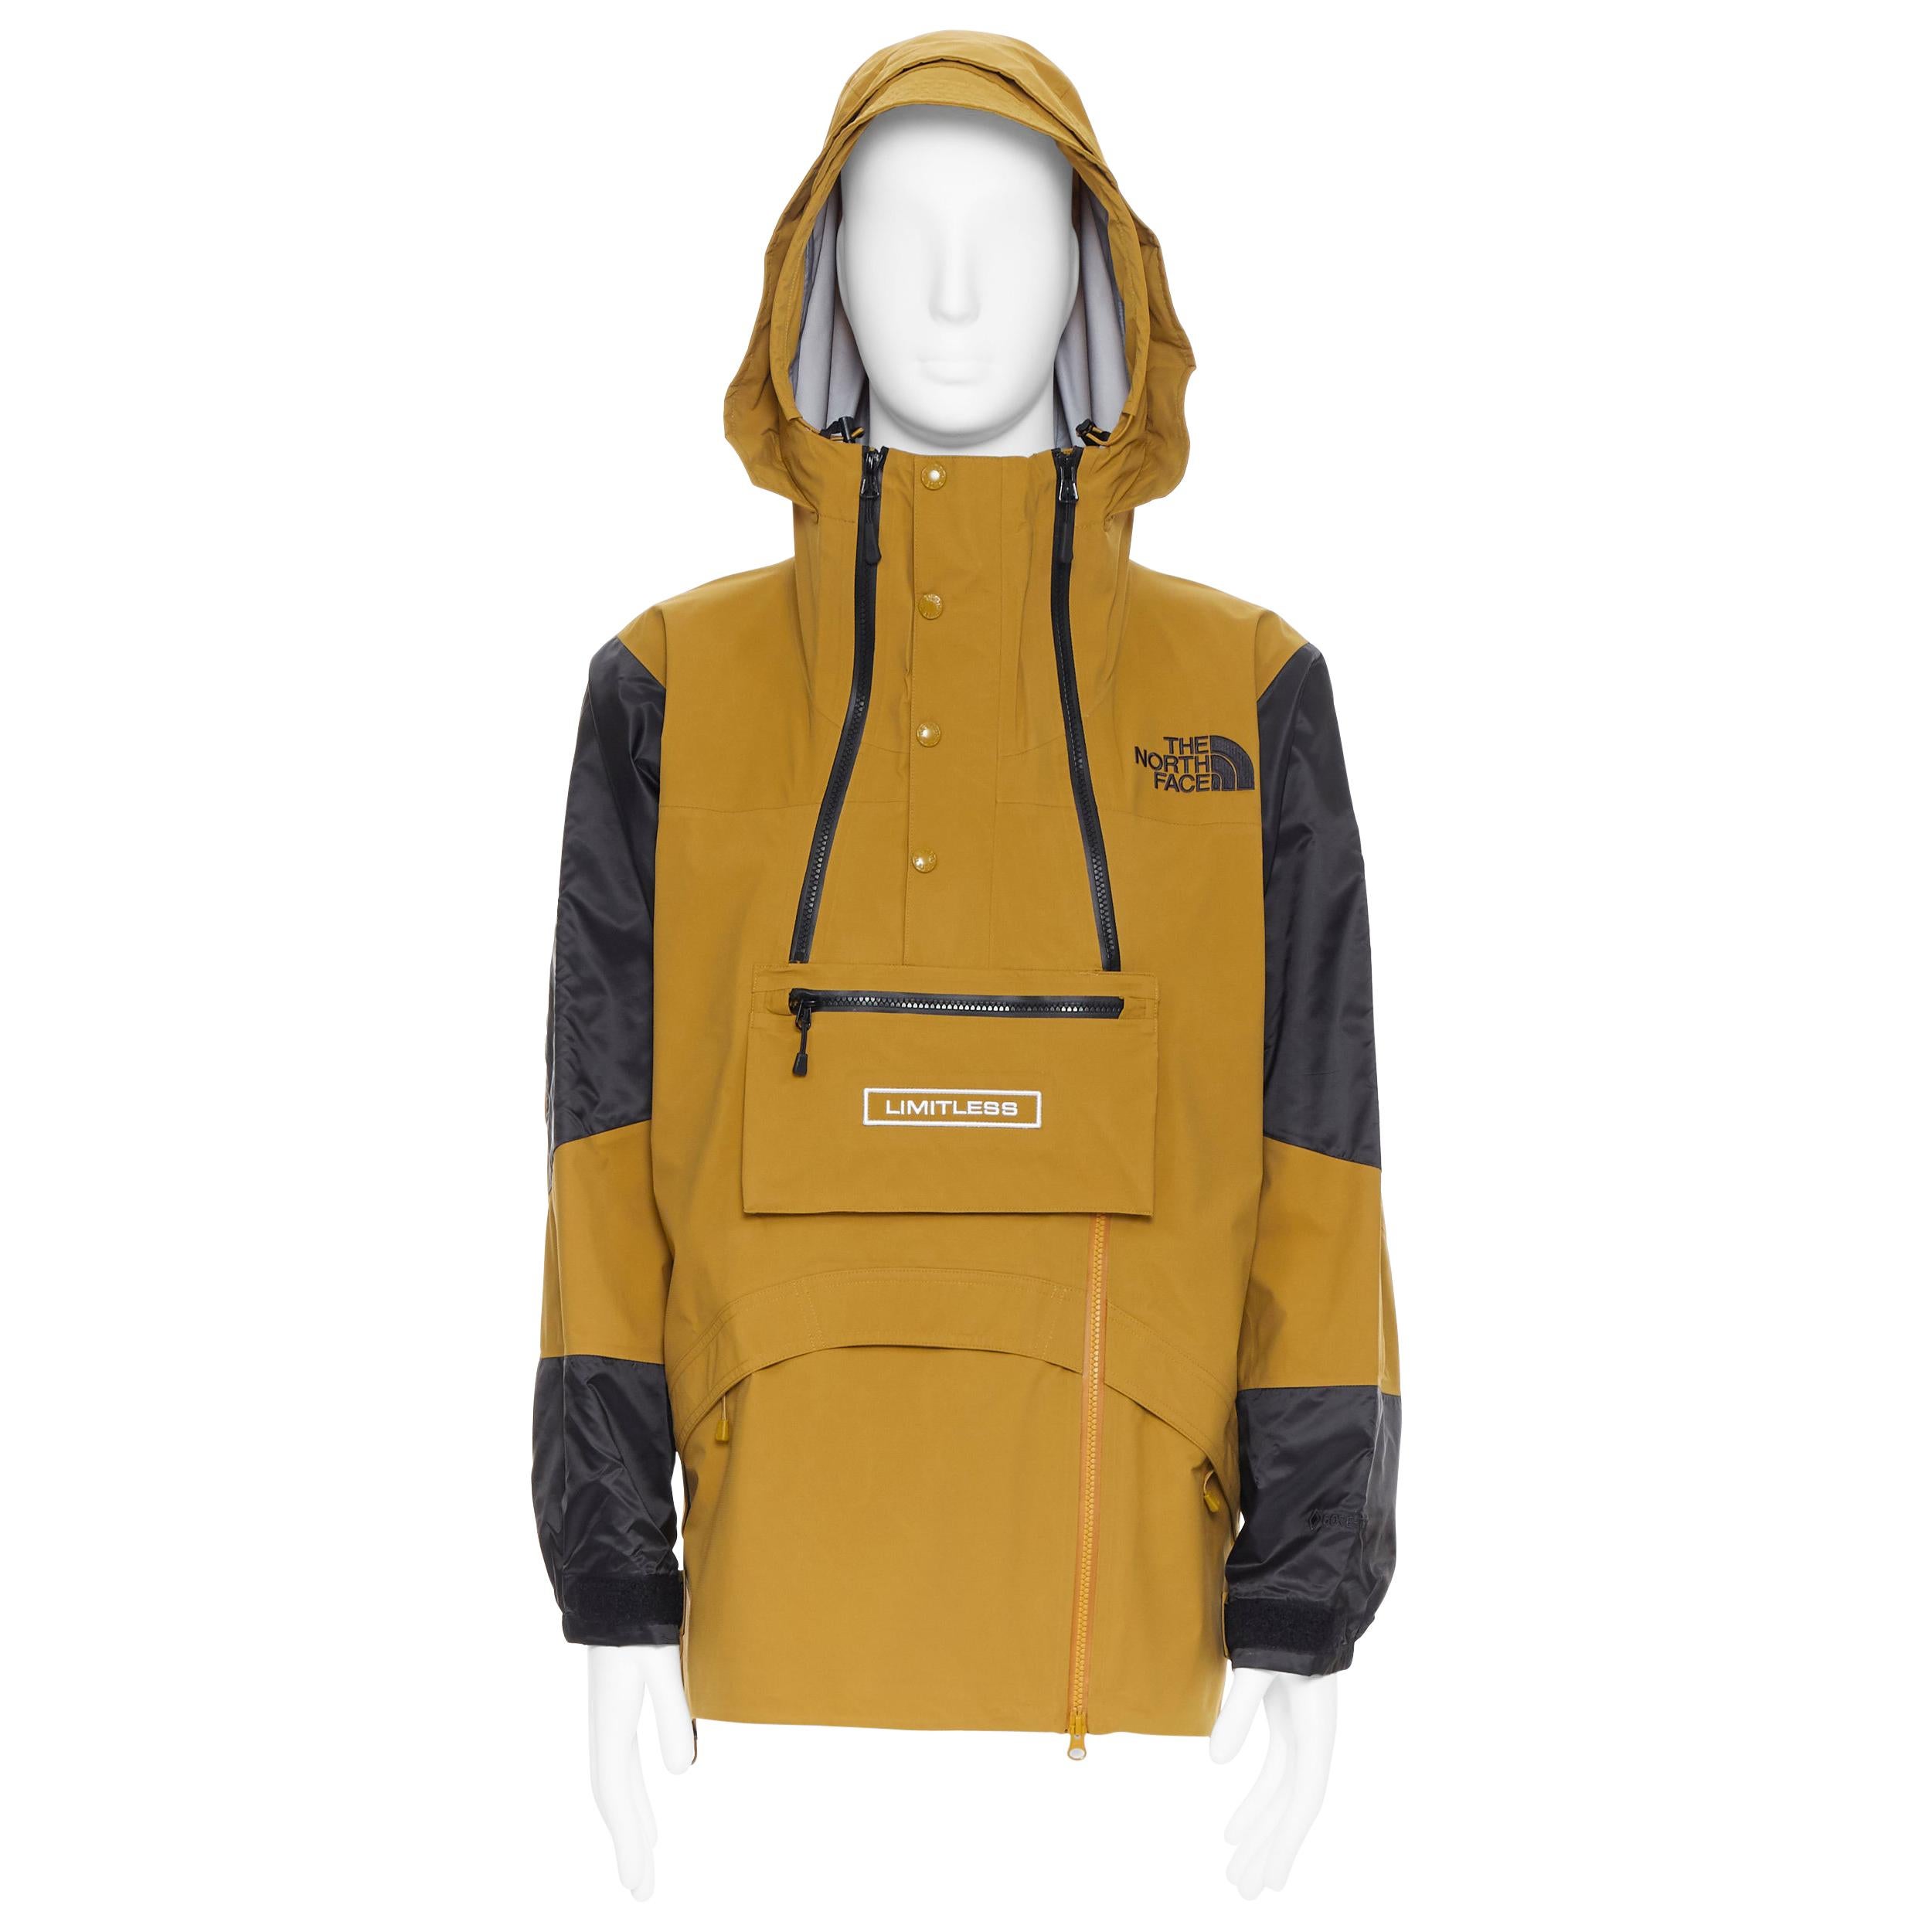 new THE NORTH FACE KAZUKI KARAISHI Urban Gear Limitless Gore Tex raincoat L / XL